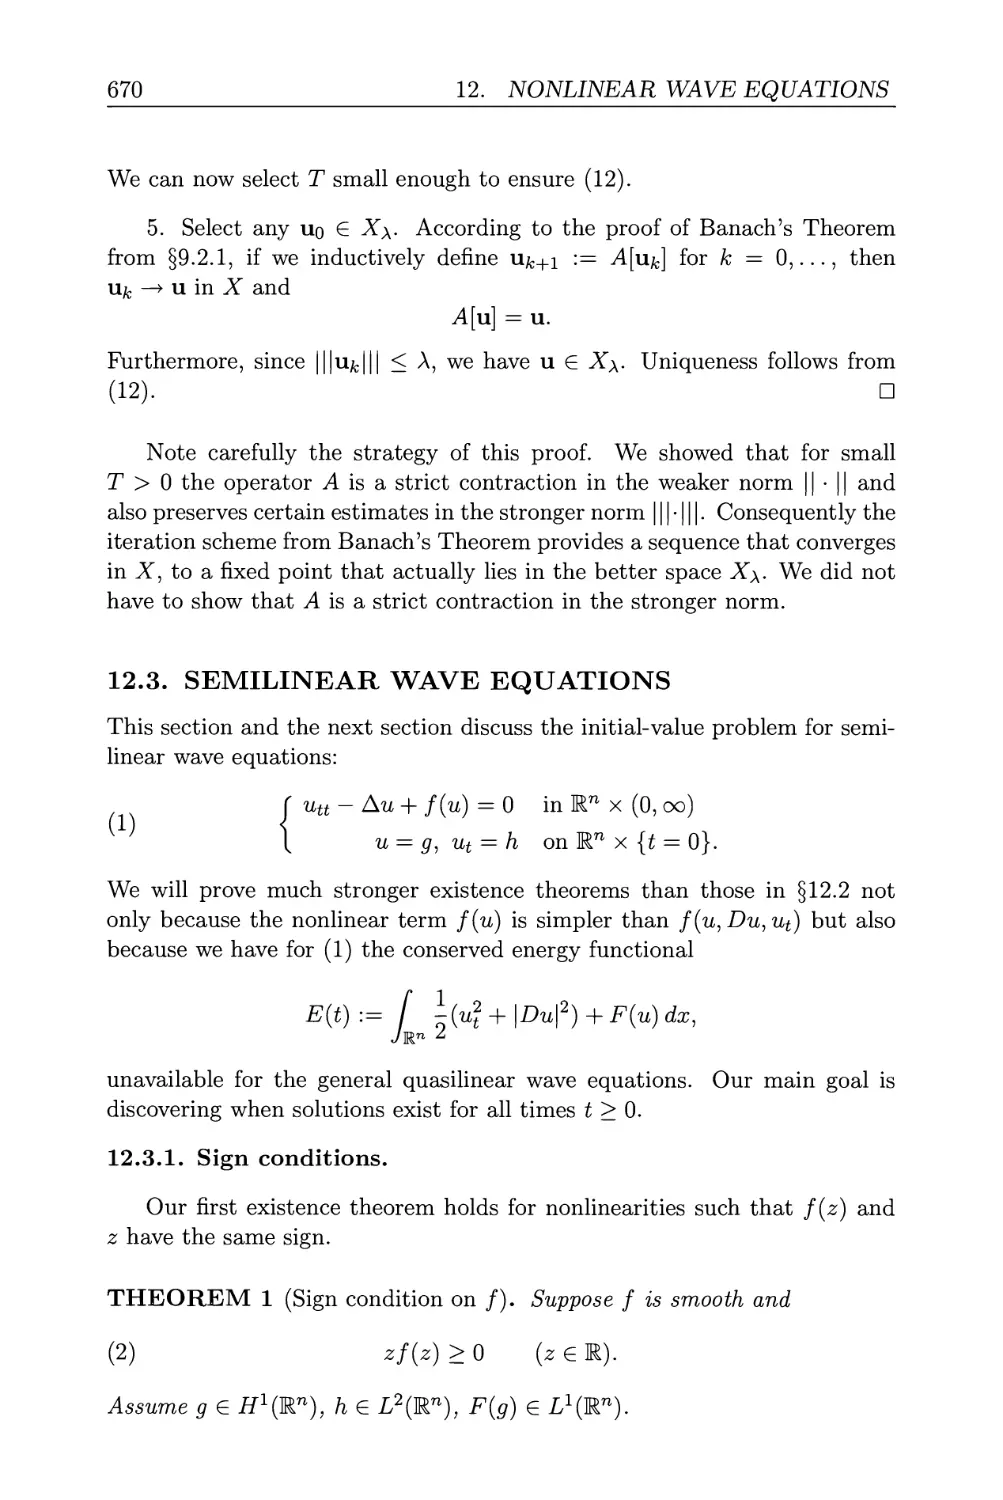 12.3. Semilinear wave equations